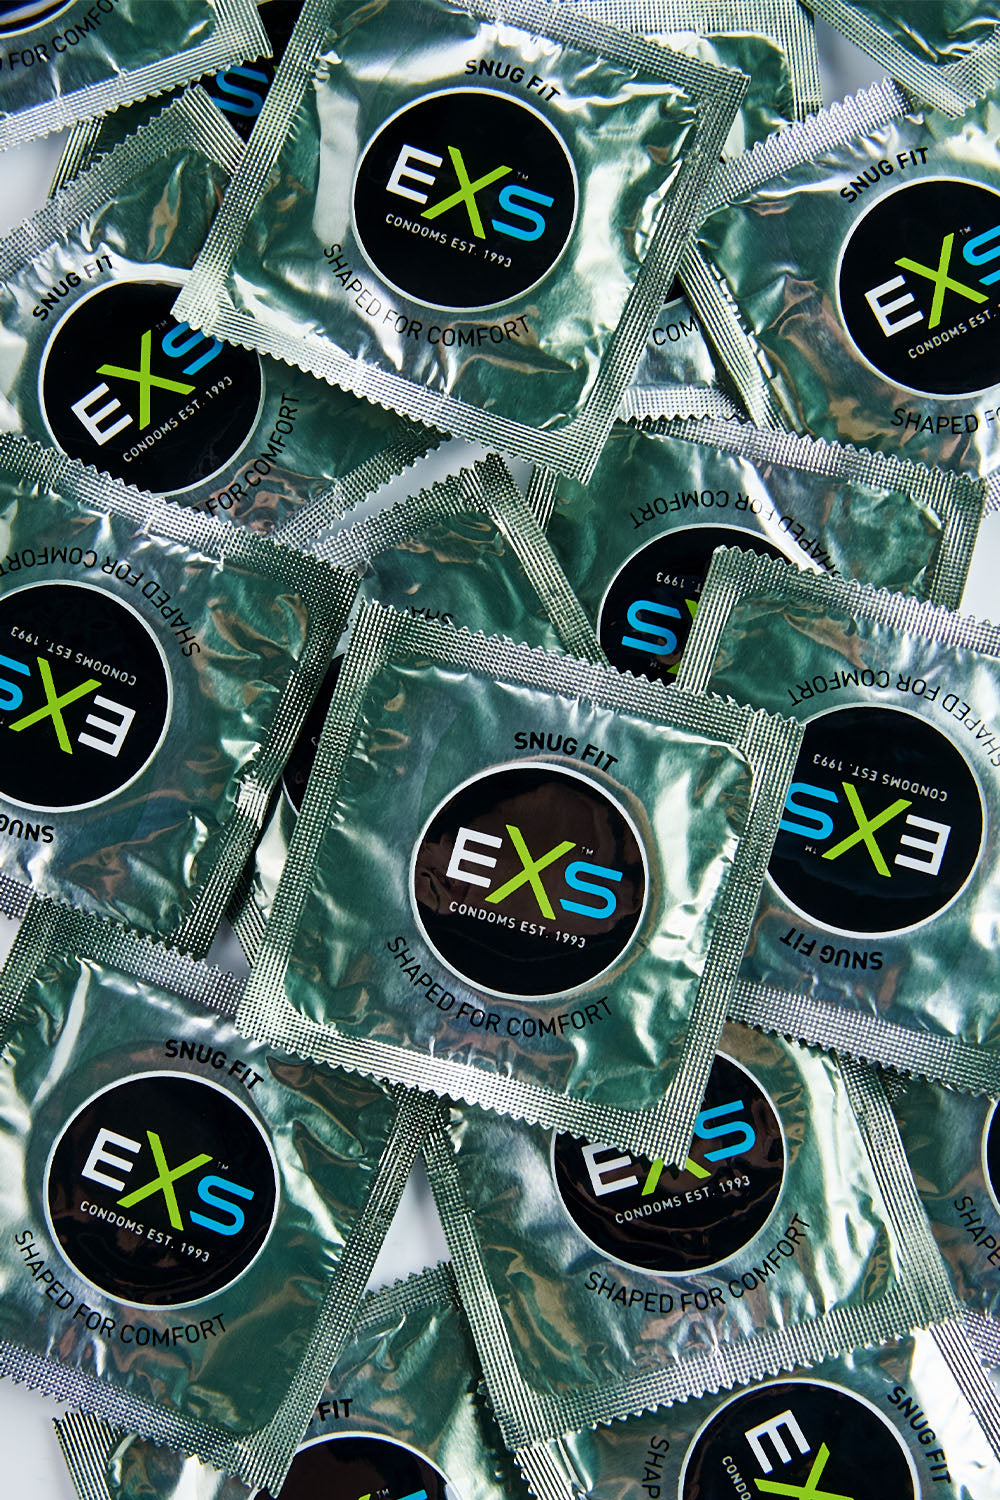 EXS Snug Fit Condoms 100 Pack